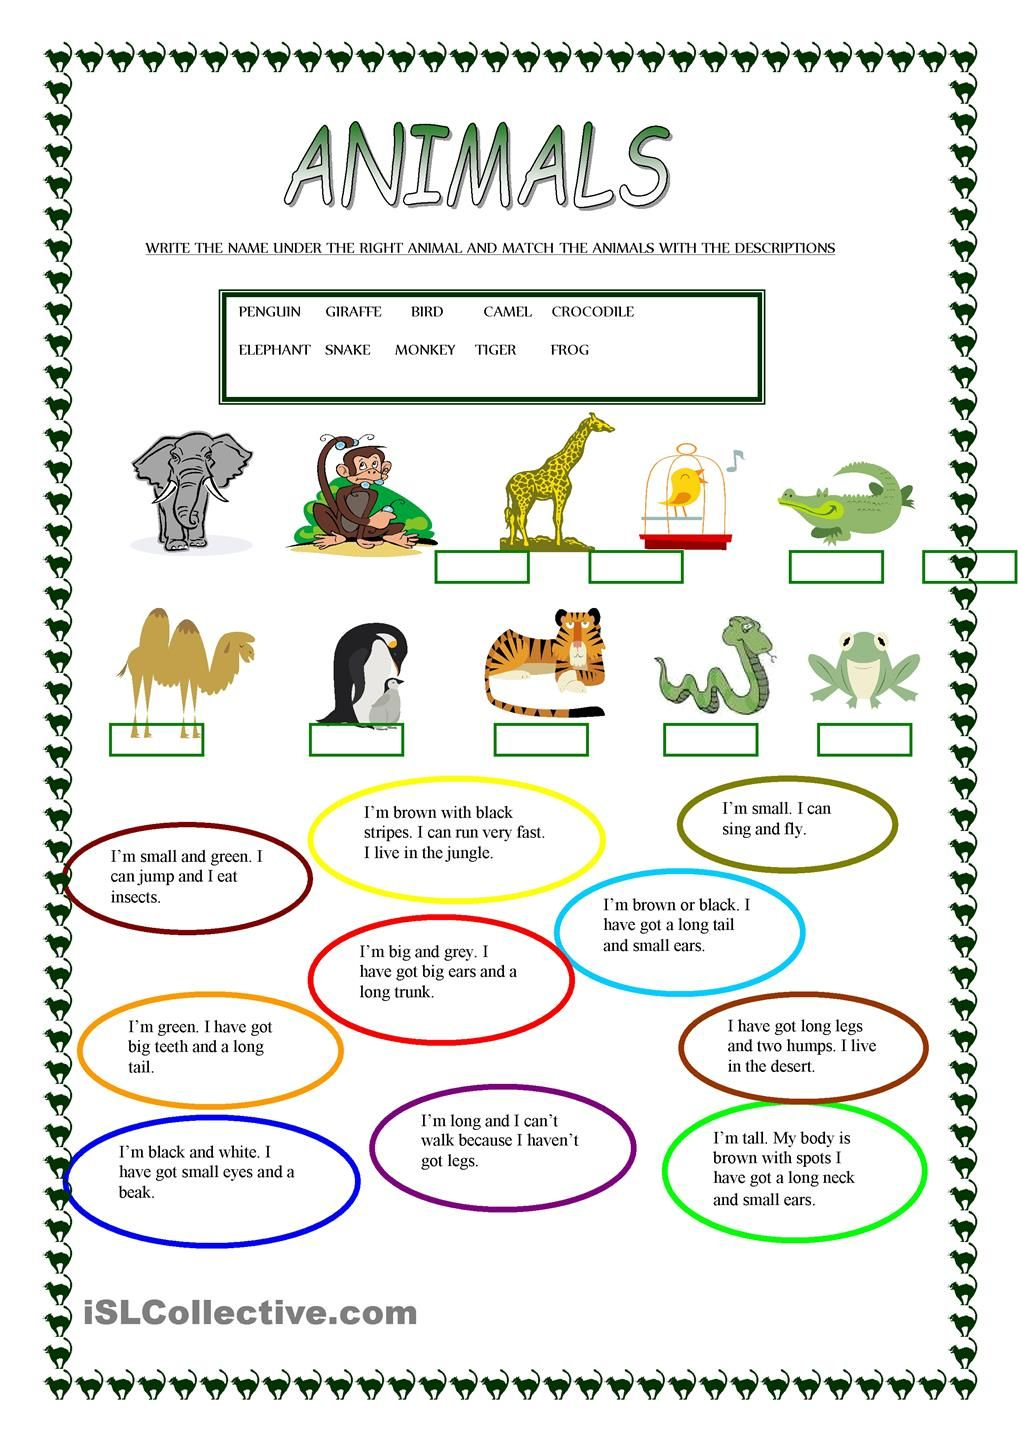 Animals | Free Esl Worksheets | Teachers Resources | Pinterest - Free Printable Esl Worksheets